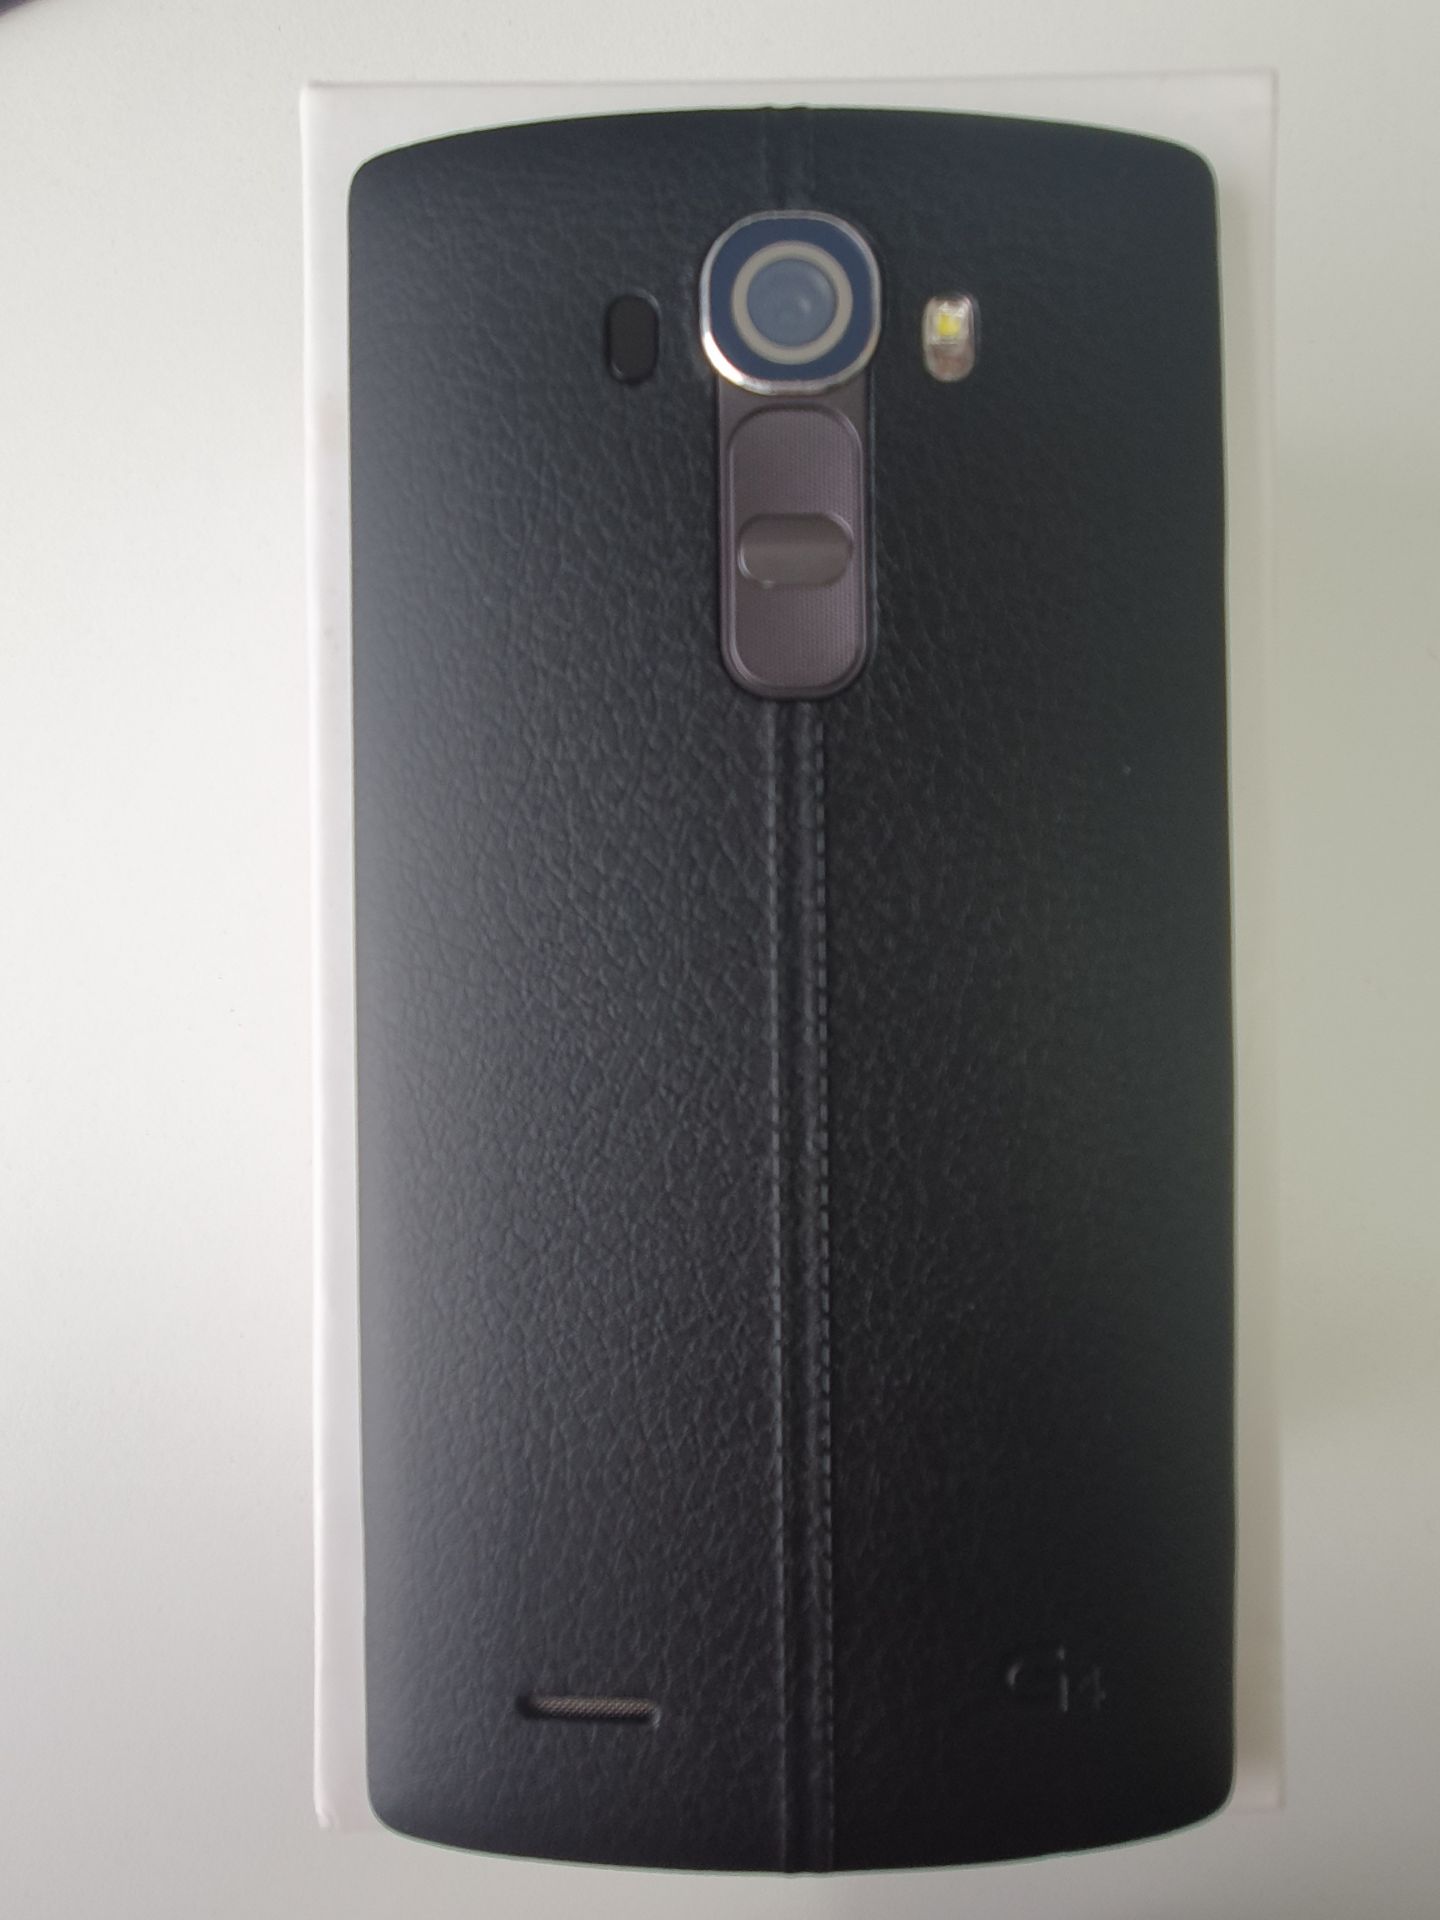 Ex-Display LG G4 Smartphone - Image 2 of 3